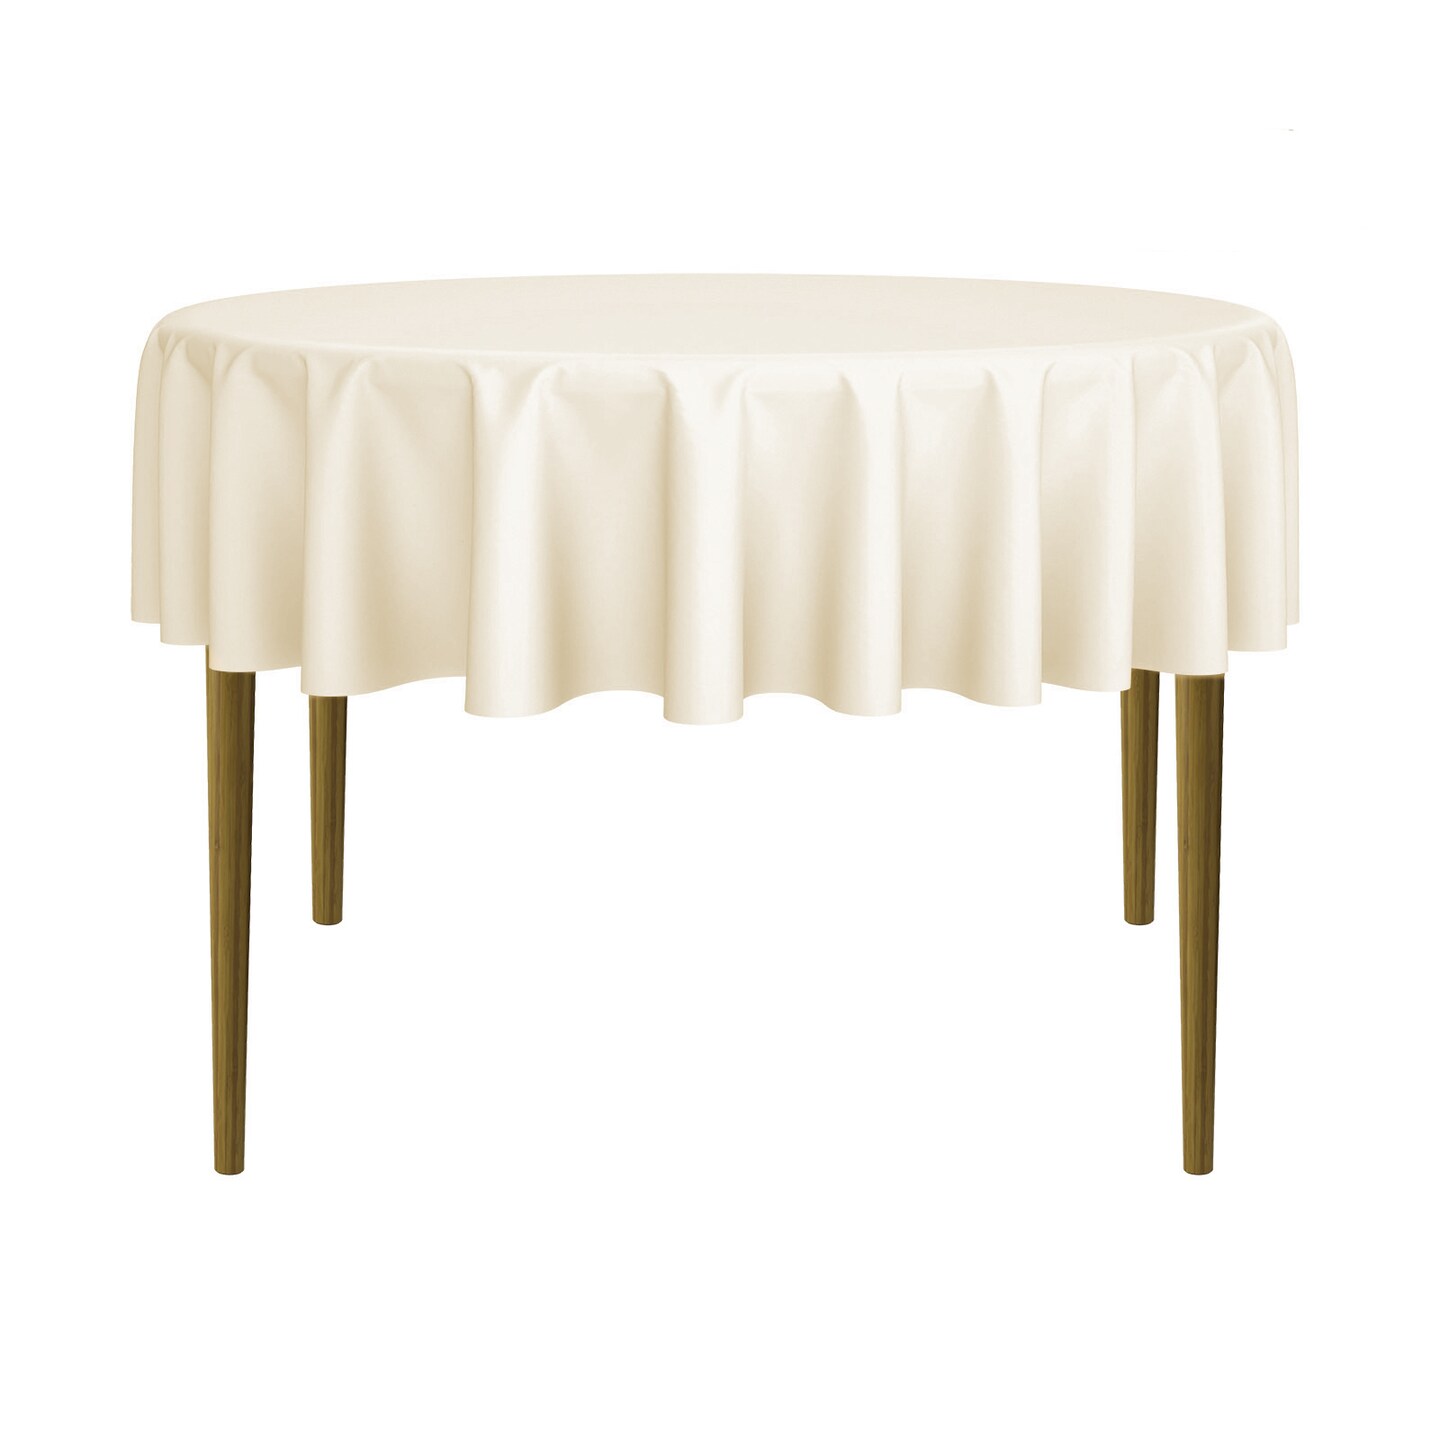 Lann's Linens - 10 Premium Round Tablecloths for Wedding / Banquet / Restaurant - Polyester Fabric Table Cloths